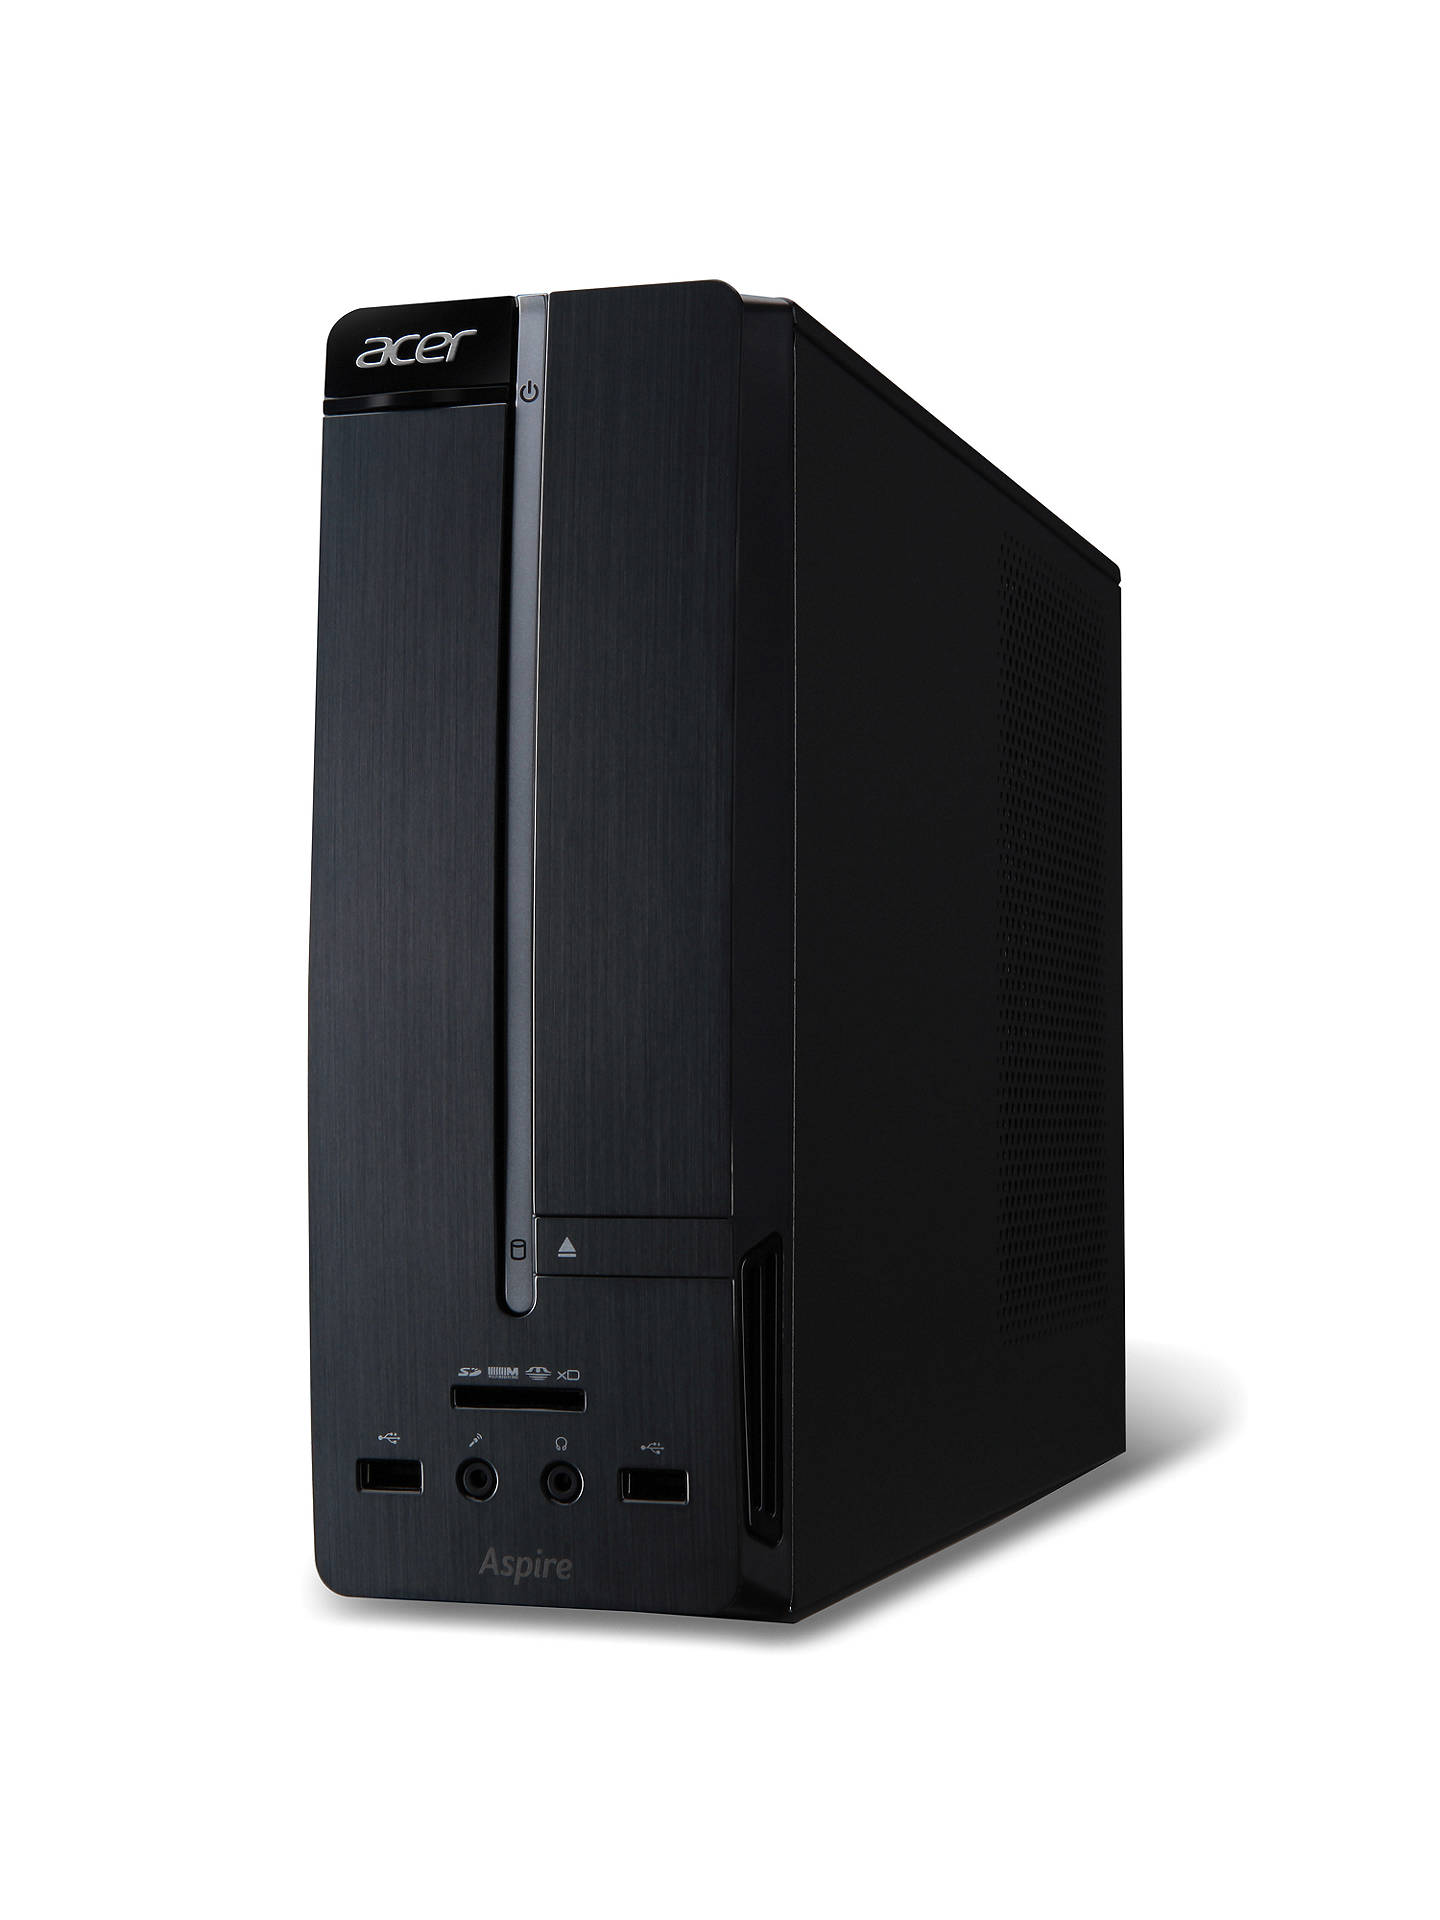 Acer Aspire XC-605 Desktop PC, Intel Core i3, 6GB RAM, 1TB, Black at